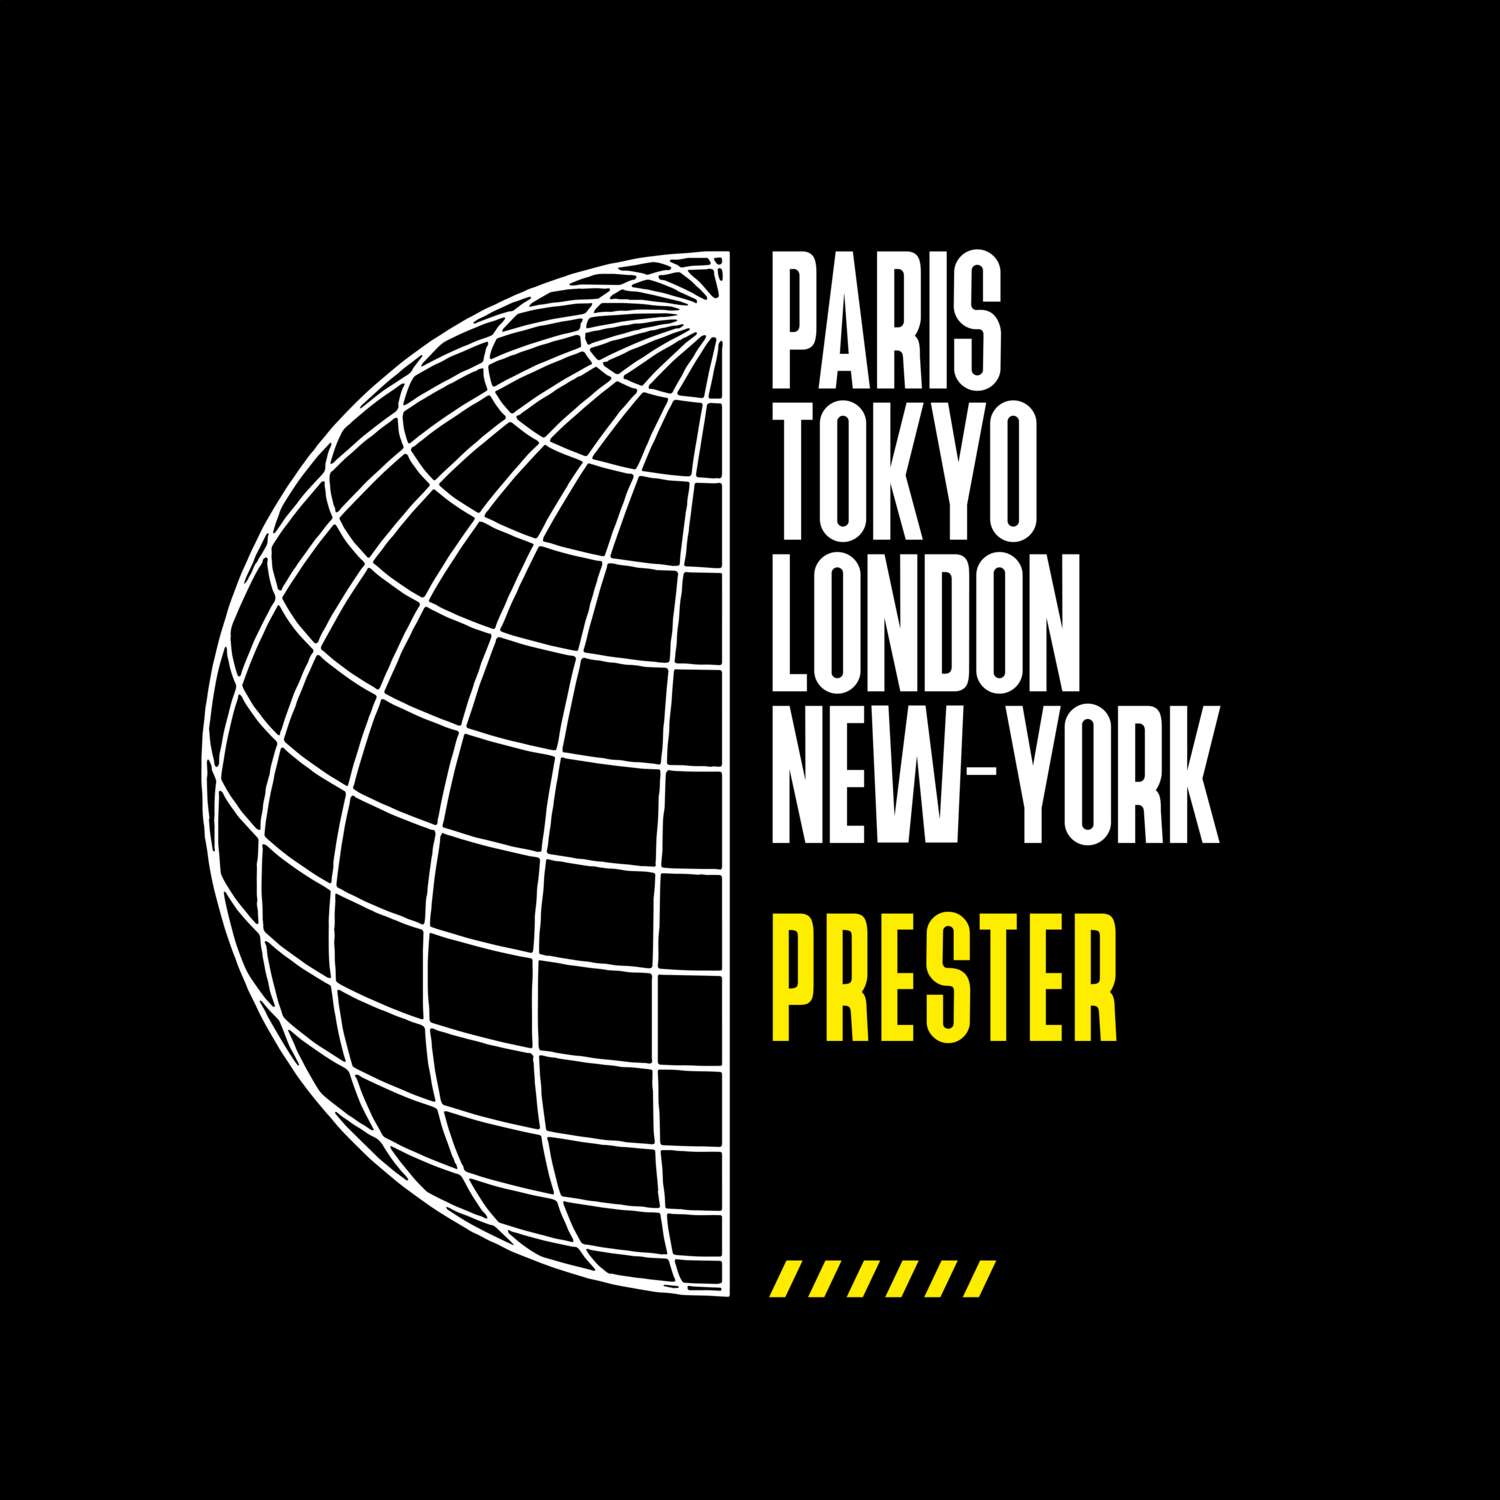 Prester T-Shirt »Paris Tokyo London«